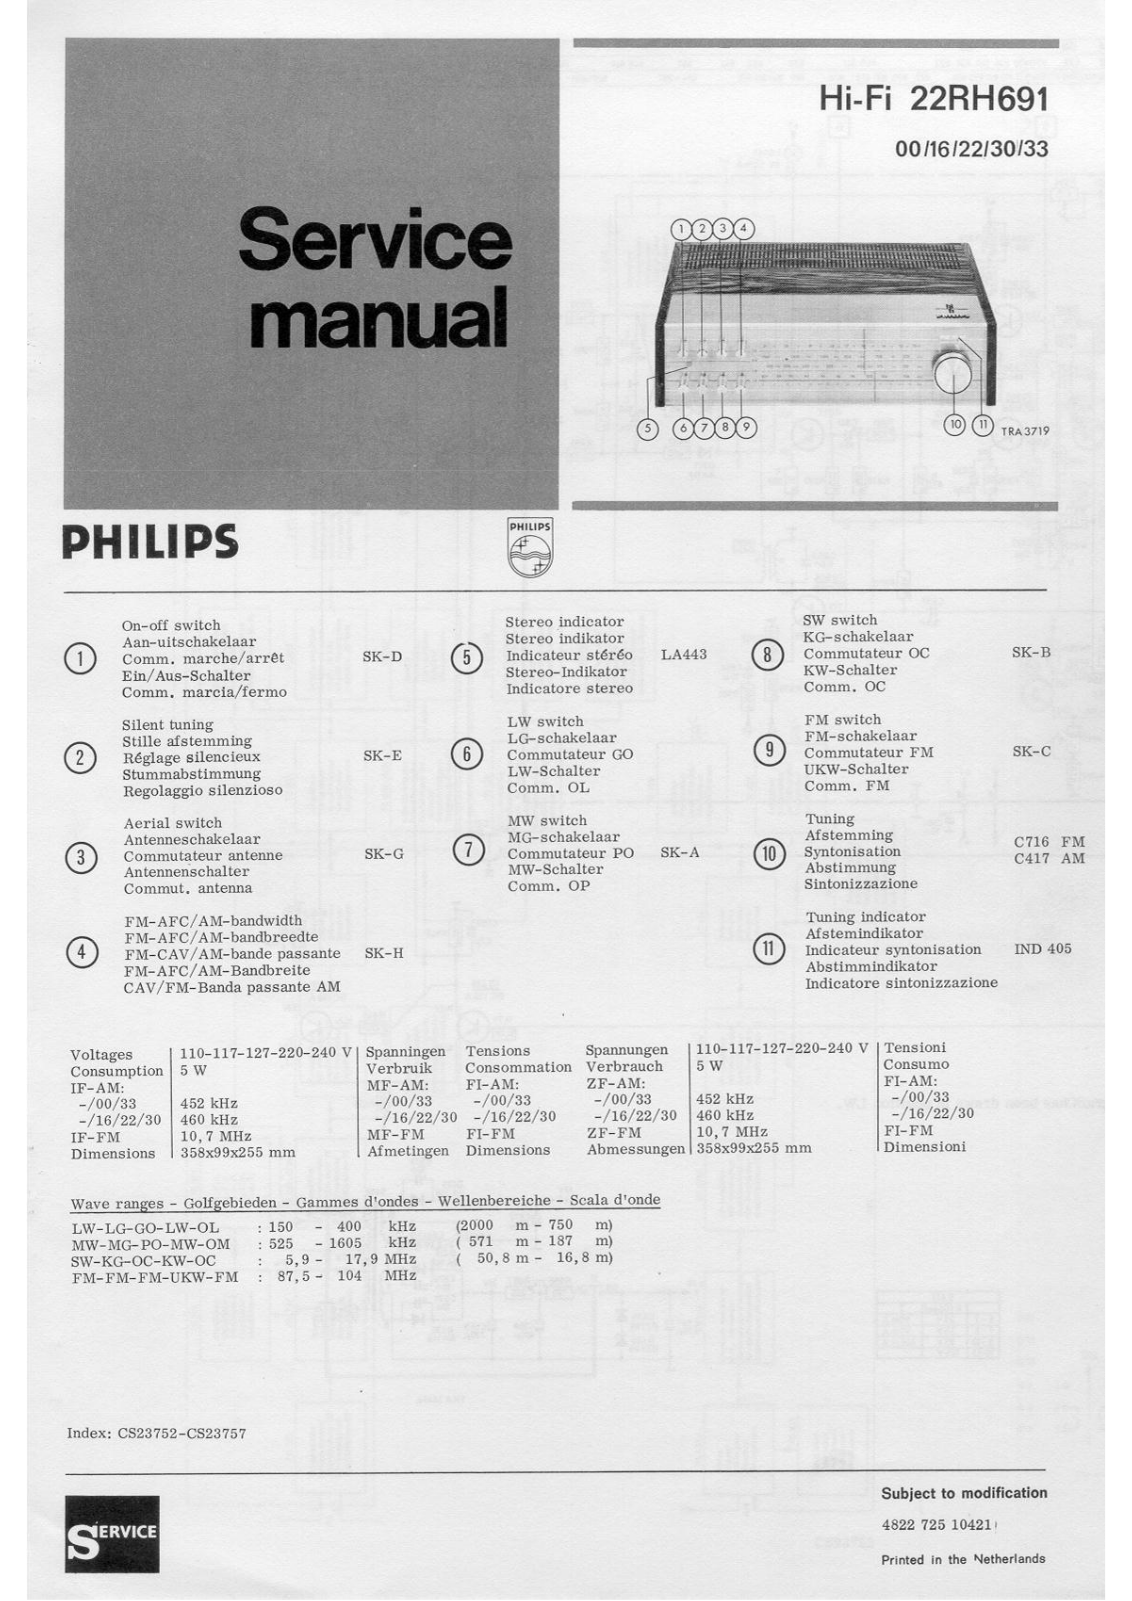 Philips 22-RH-691 Service Manual